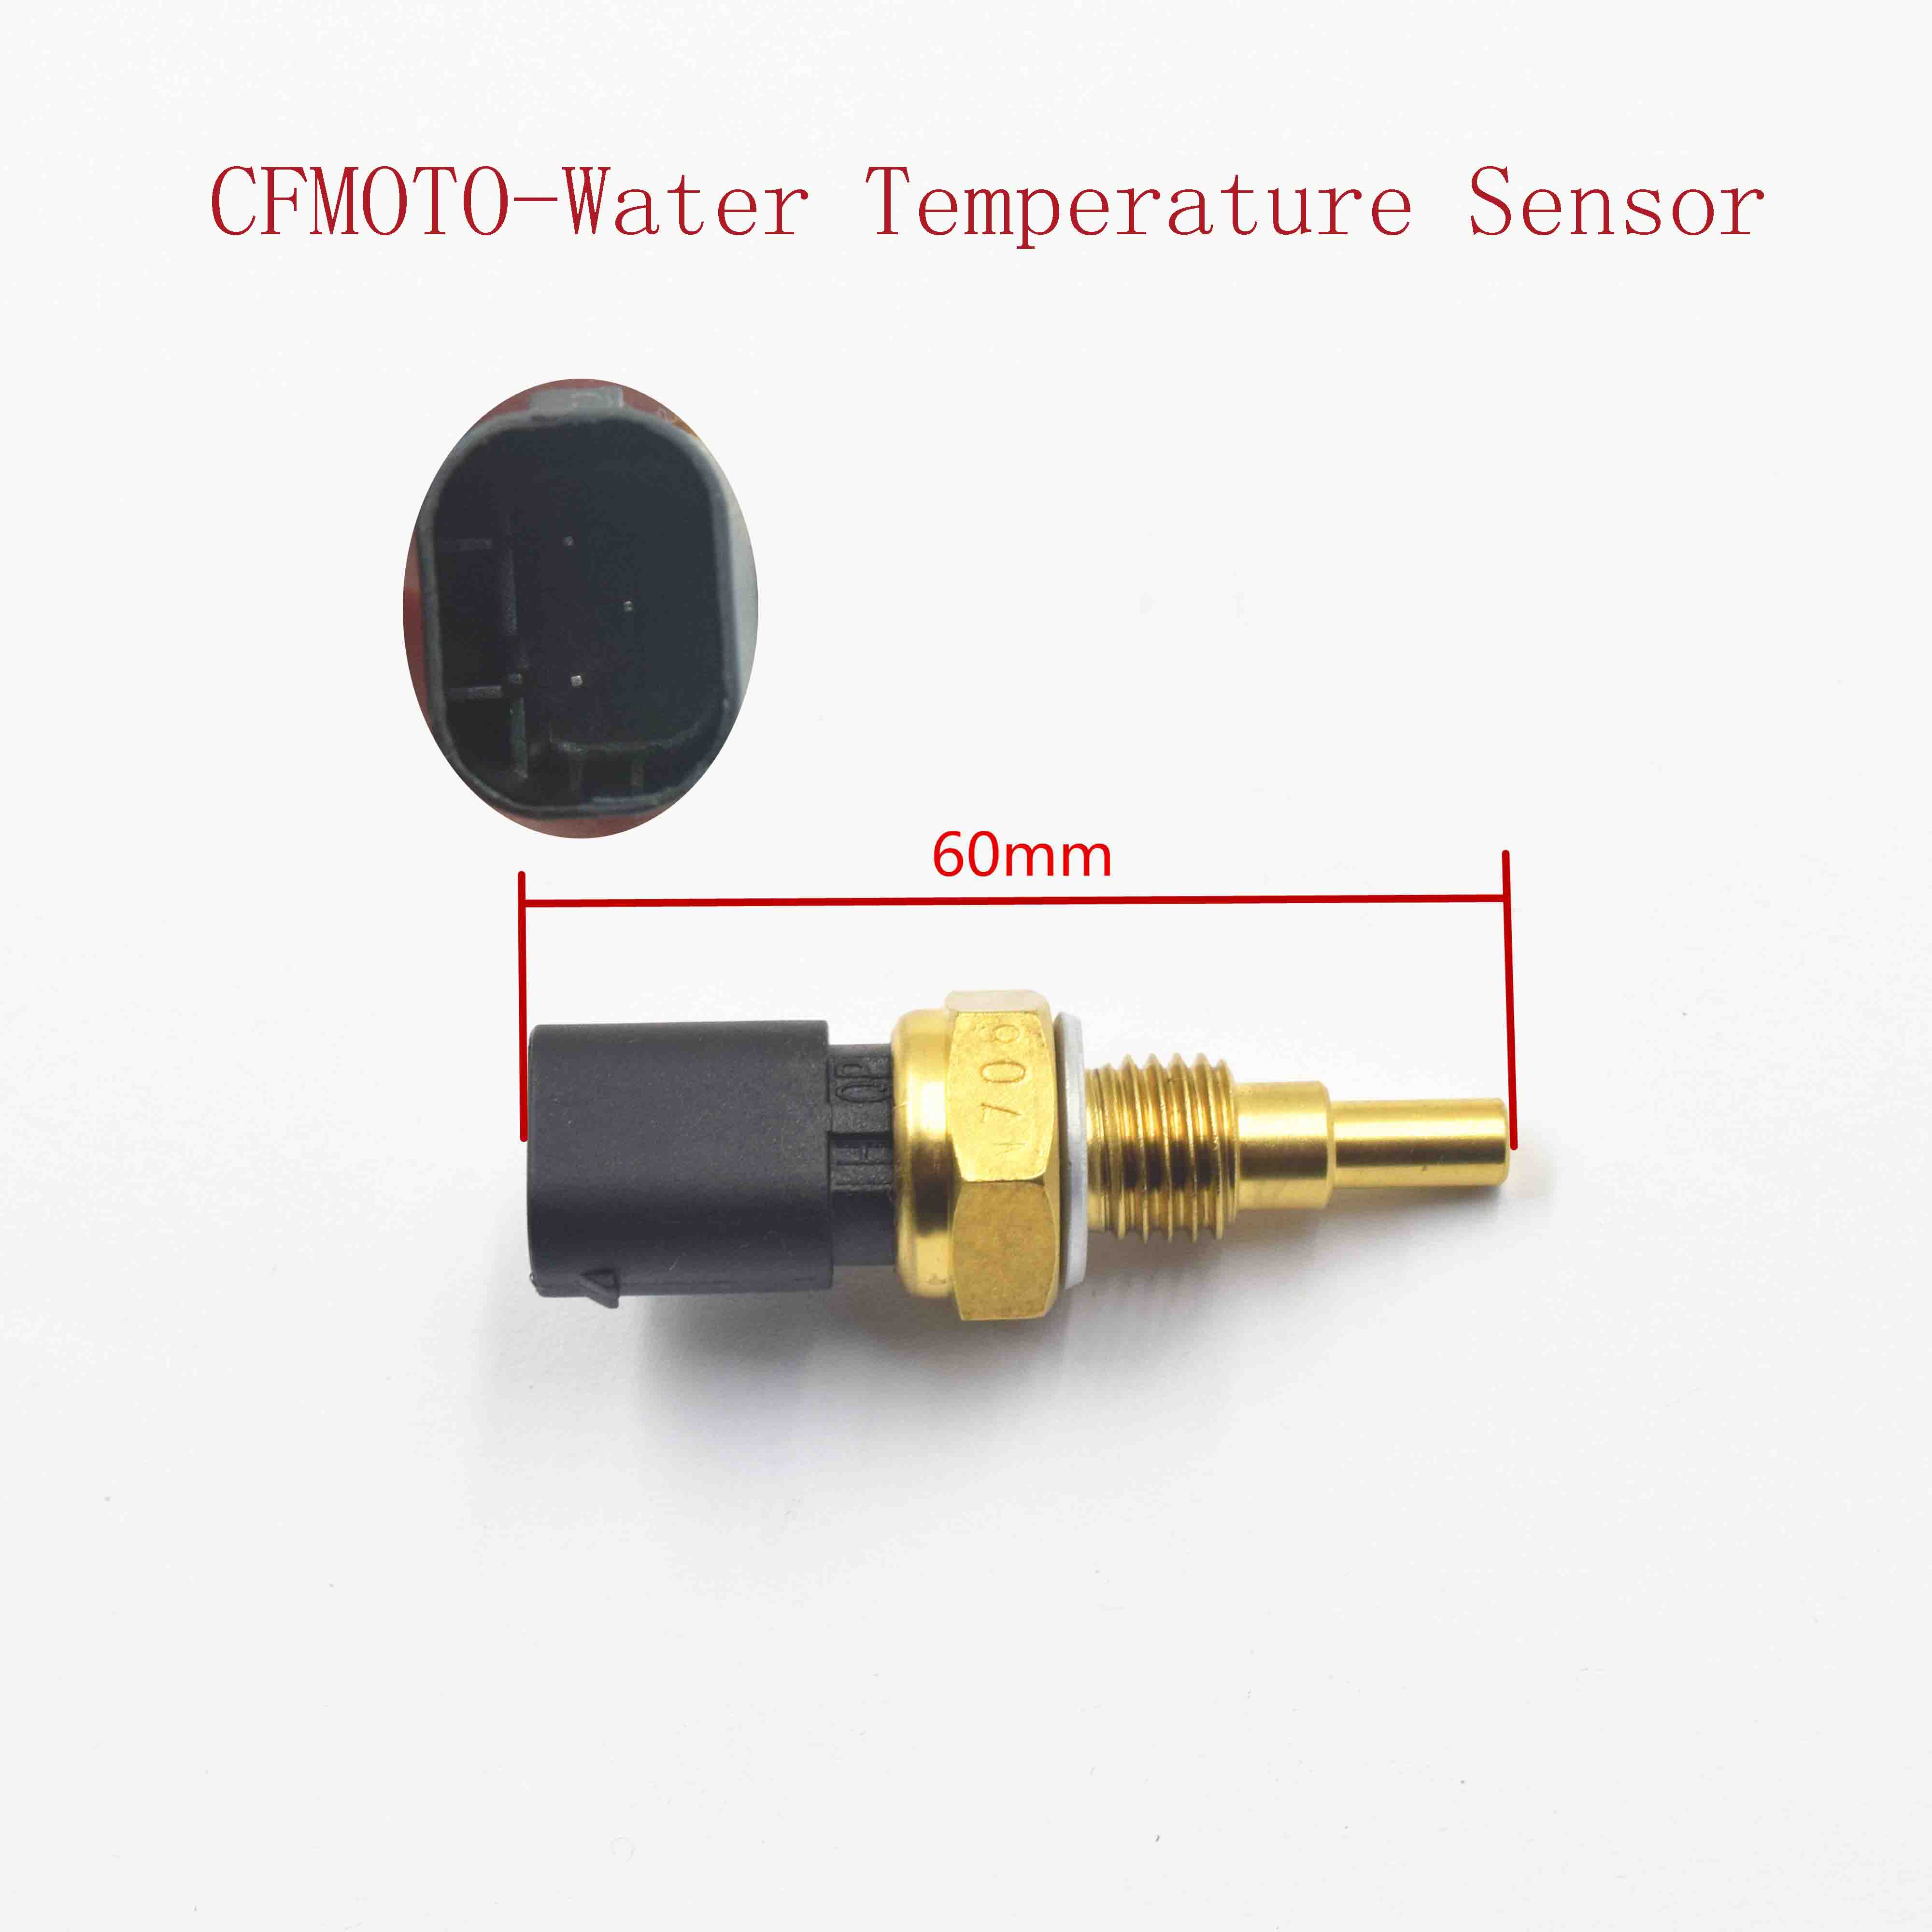 CFMOTO-Water Temperature Sensor 